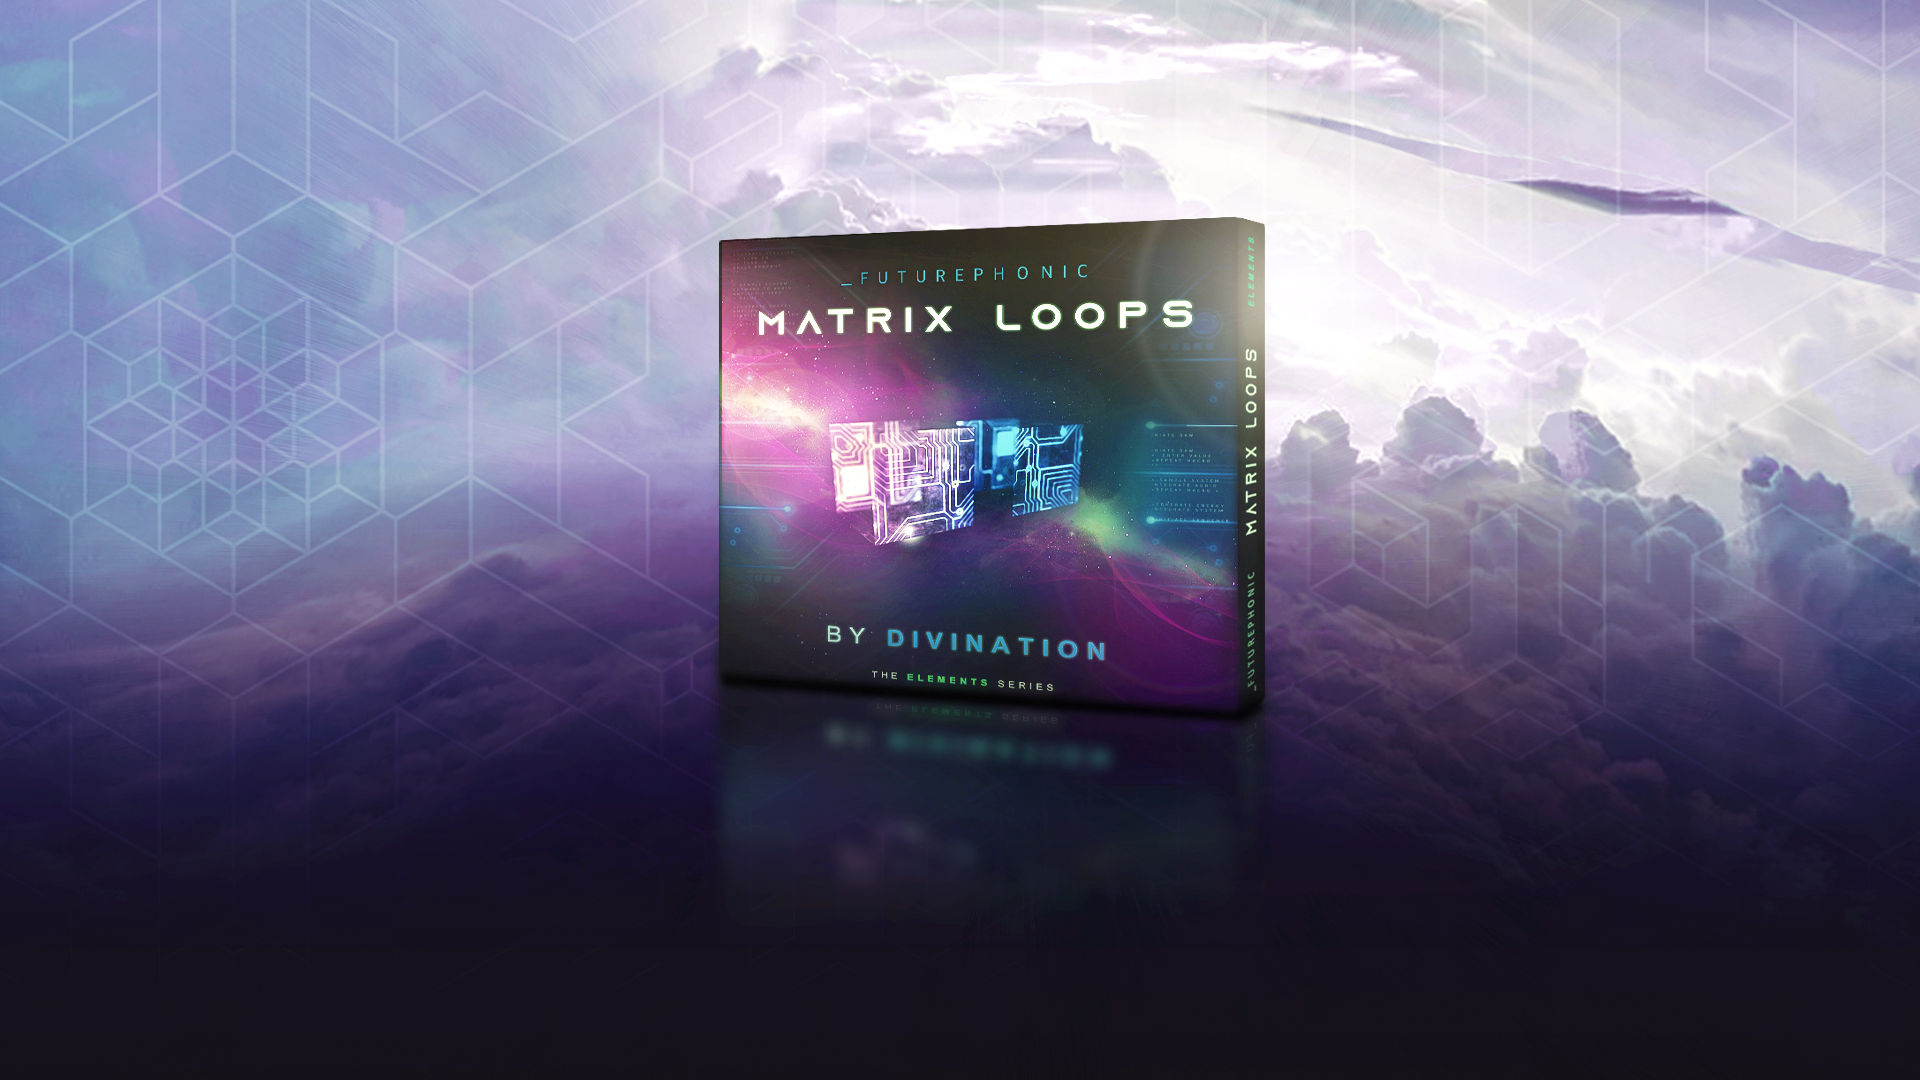 Matrix Loops by Divination - Futurephonic